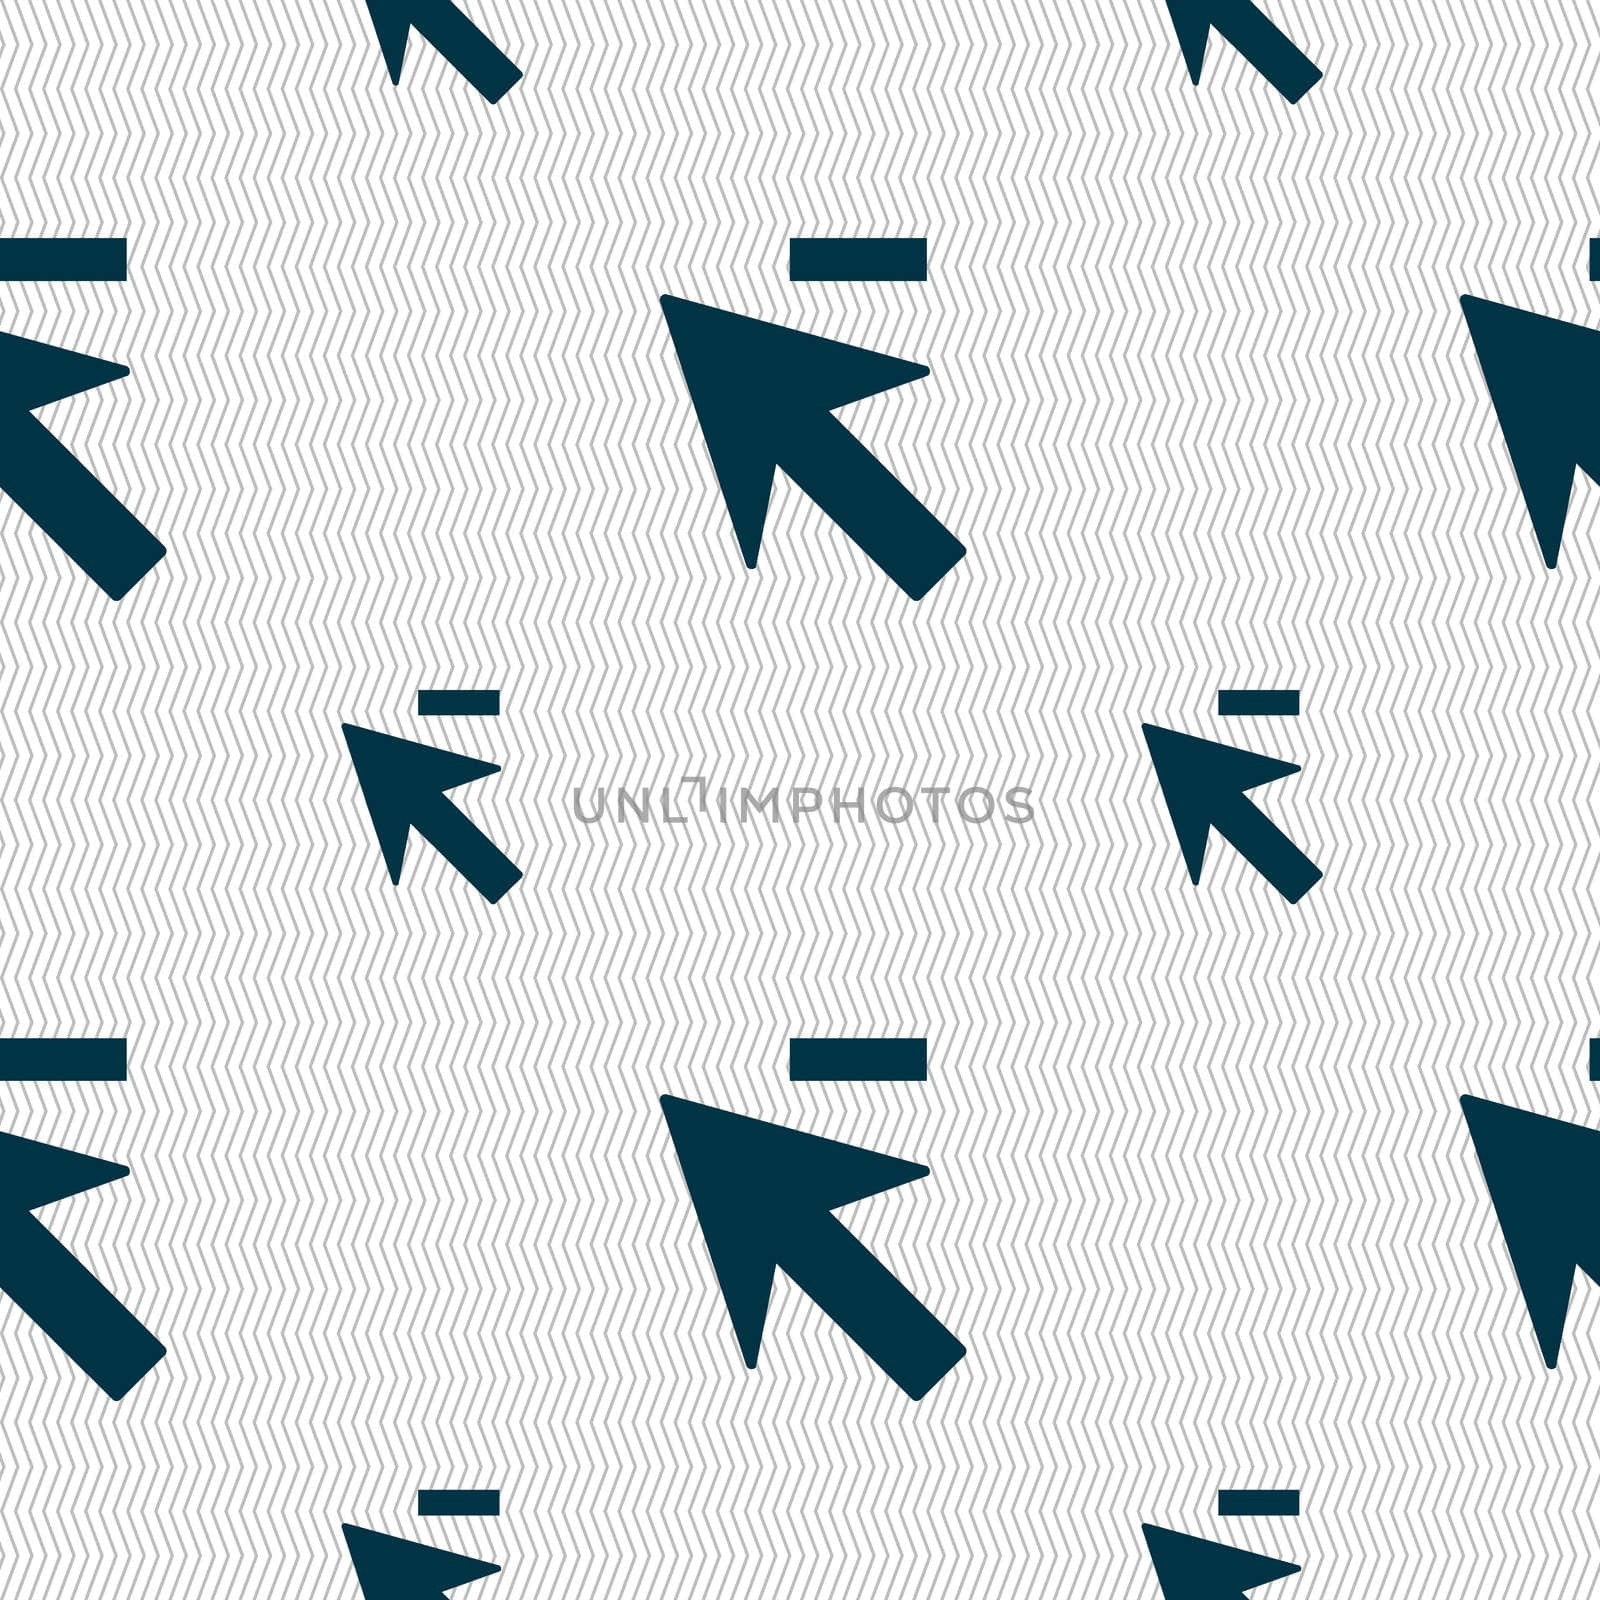 Cursor, arrow minus icon sign. Seamless pattern with geometric texture. illustration